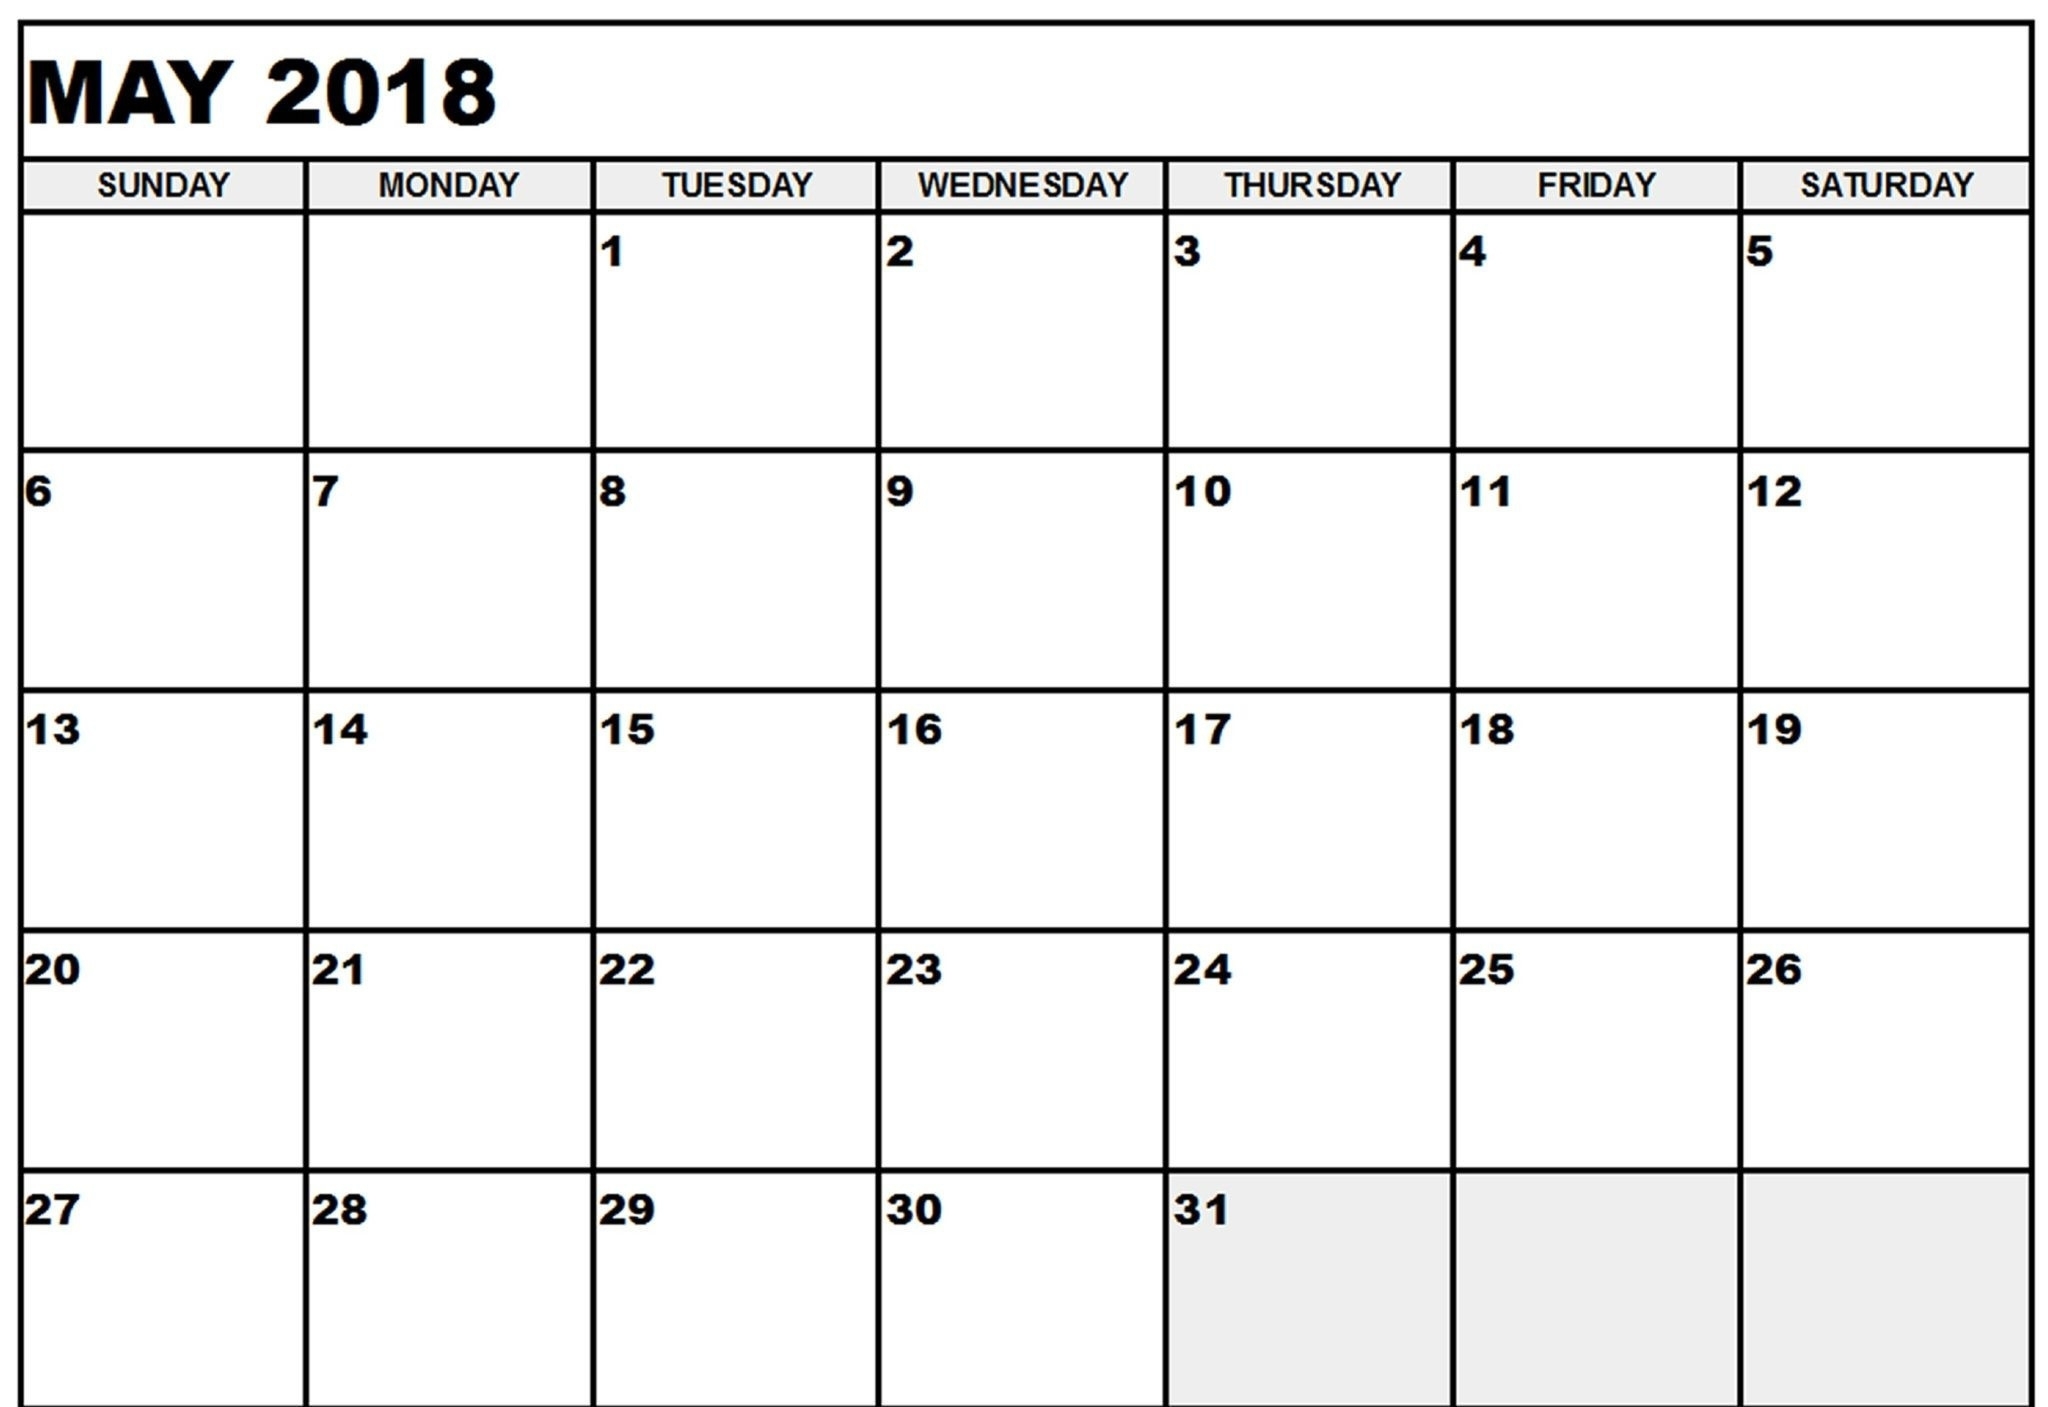 Julian Date Calendar For Year 2018 Elegant Printable Julian Date pertaining to Julian Date Calendar For Non Leap Year